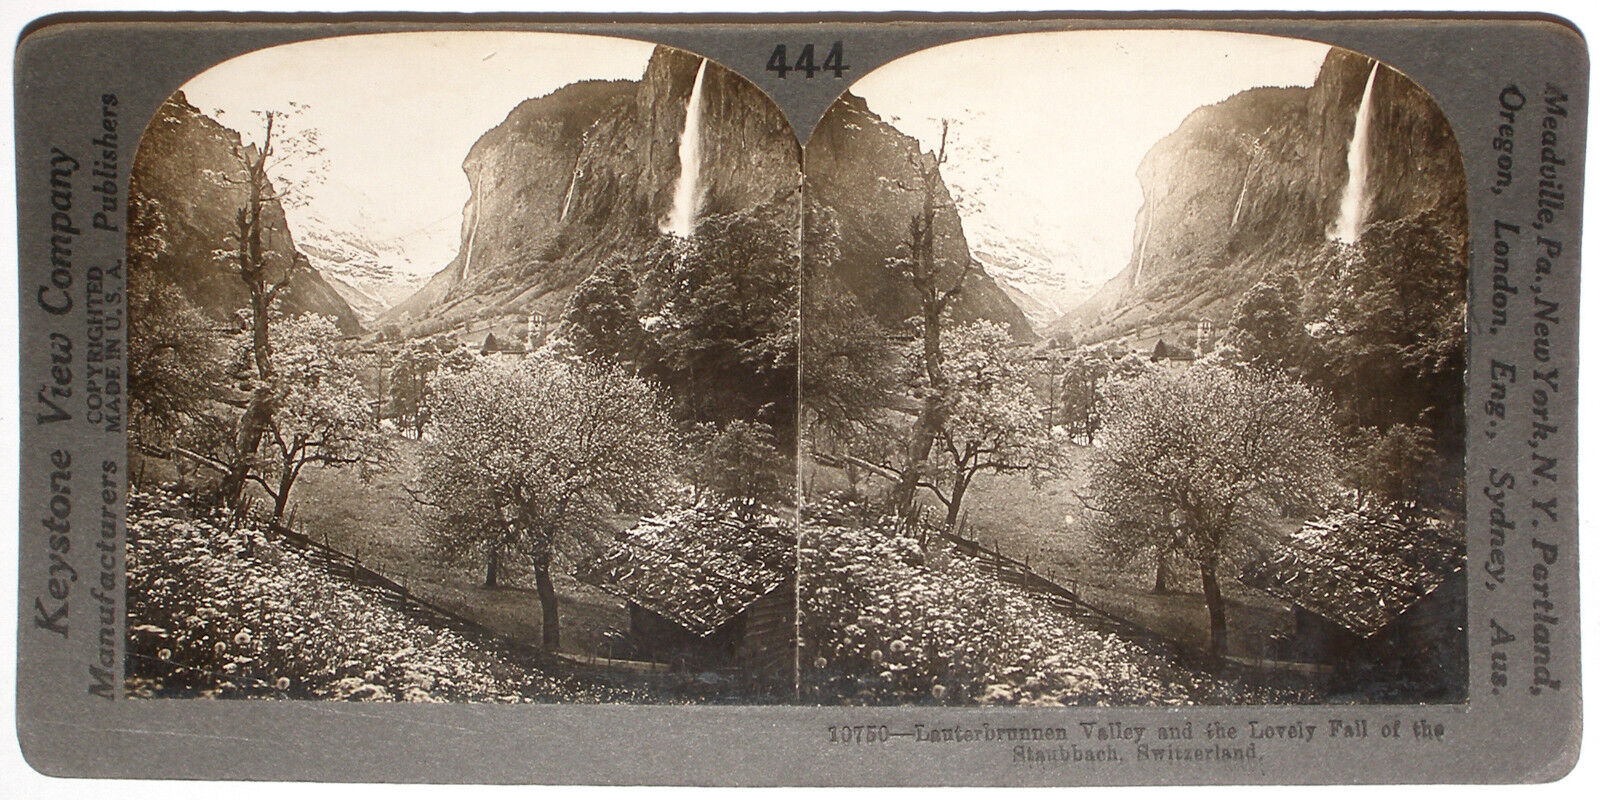 Keystone Stereoview Lauterbrunnen Valley, Switzerland 1910’s Education Set #444